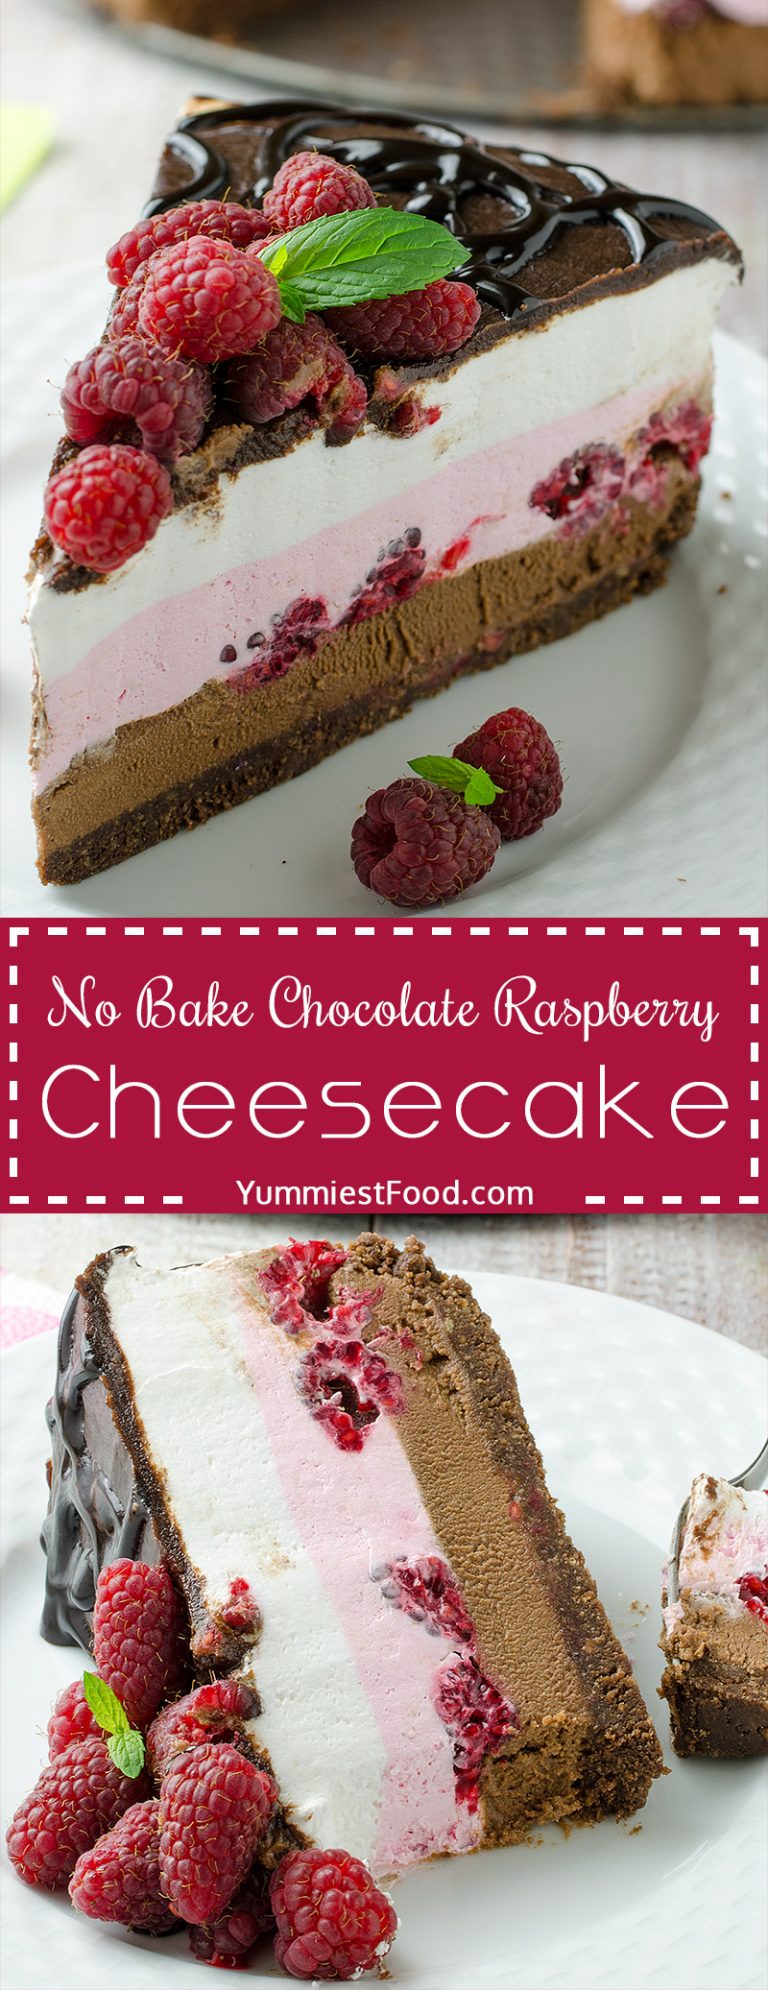 No Bake Chocolate Raspberry Cheesecake – Recipe from Yummiest Food Cookbook